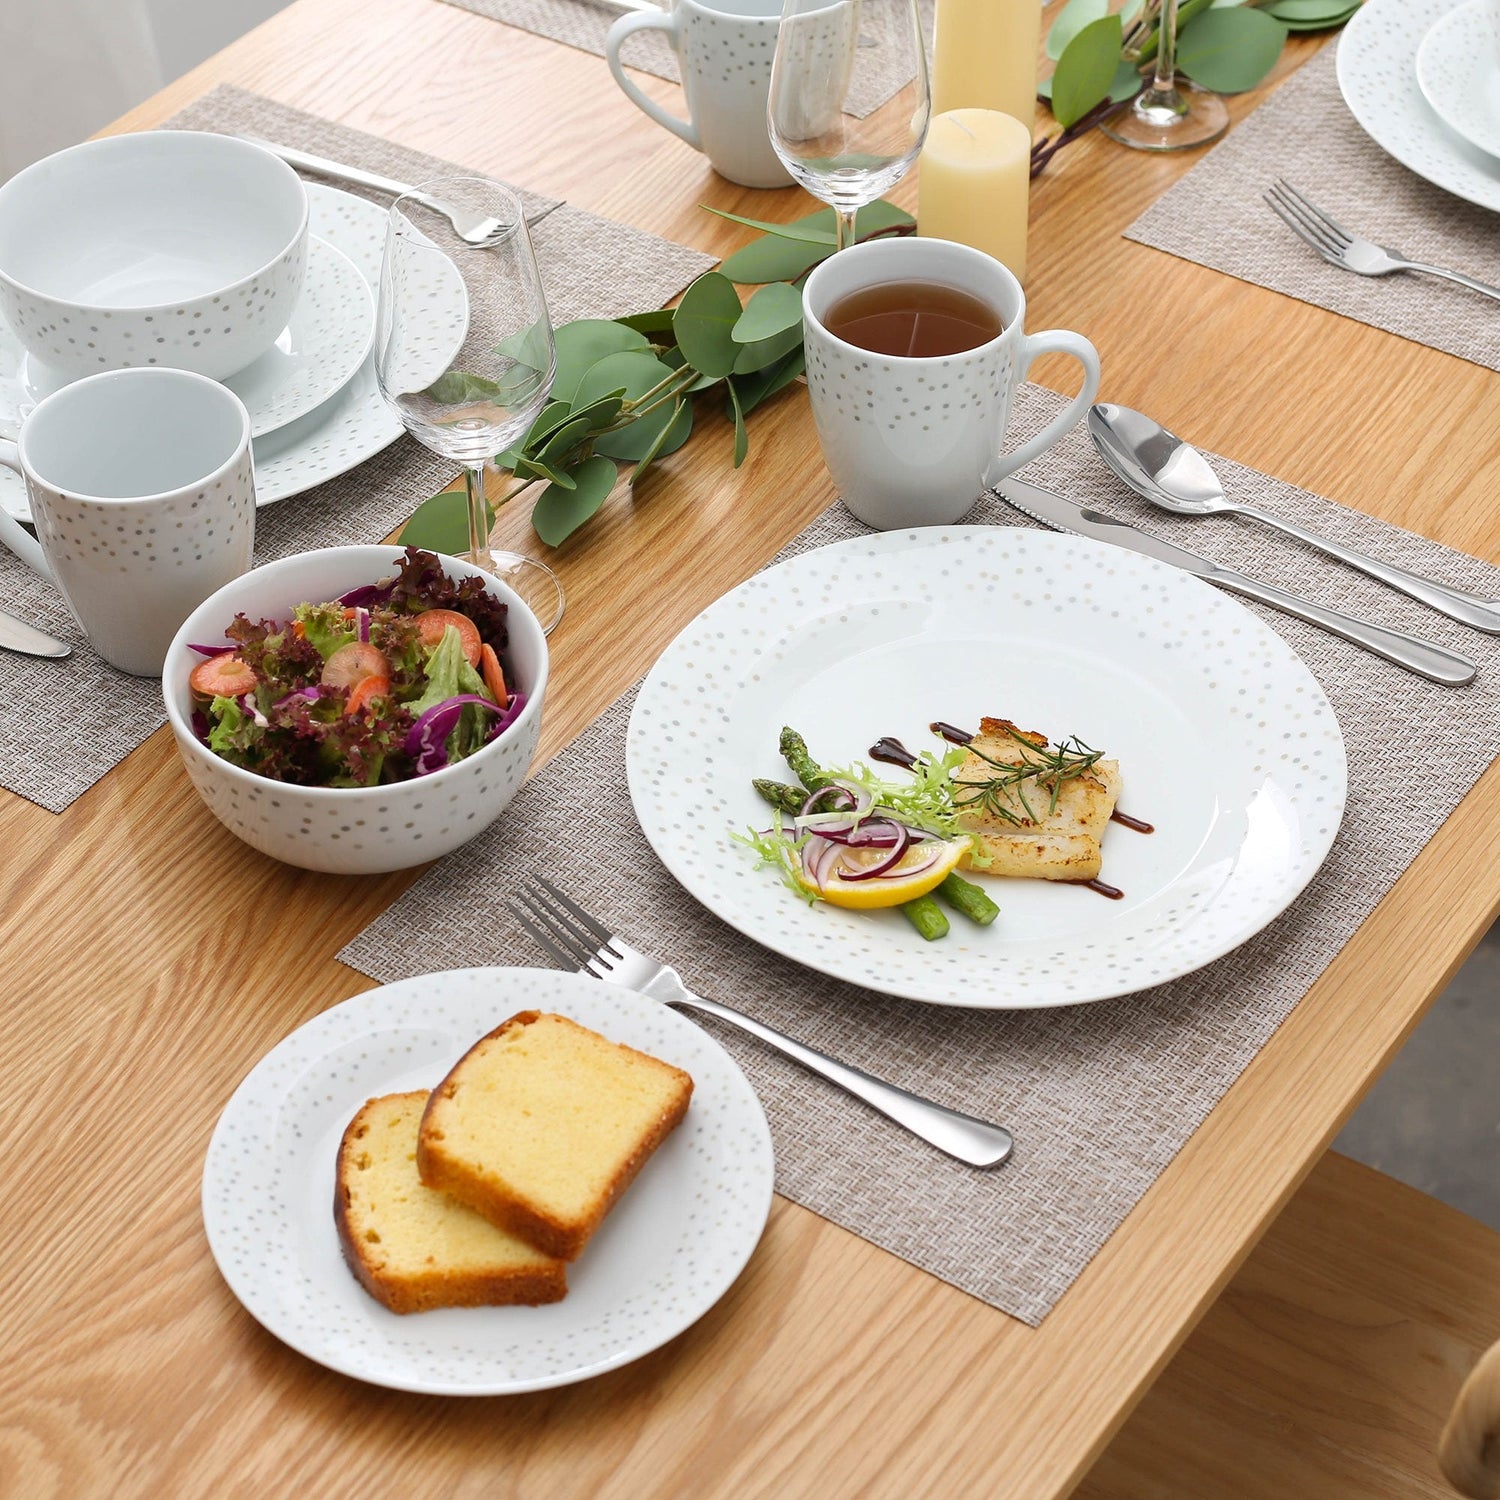 ORION Porcelain Ceramic Dinnerware(32-Pieces) - Nordic Side - 